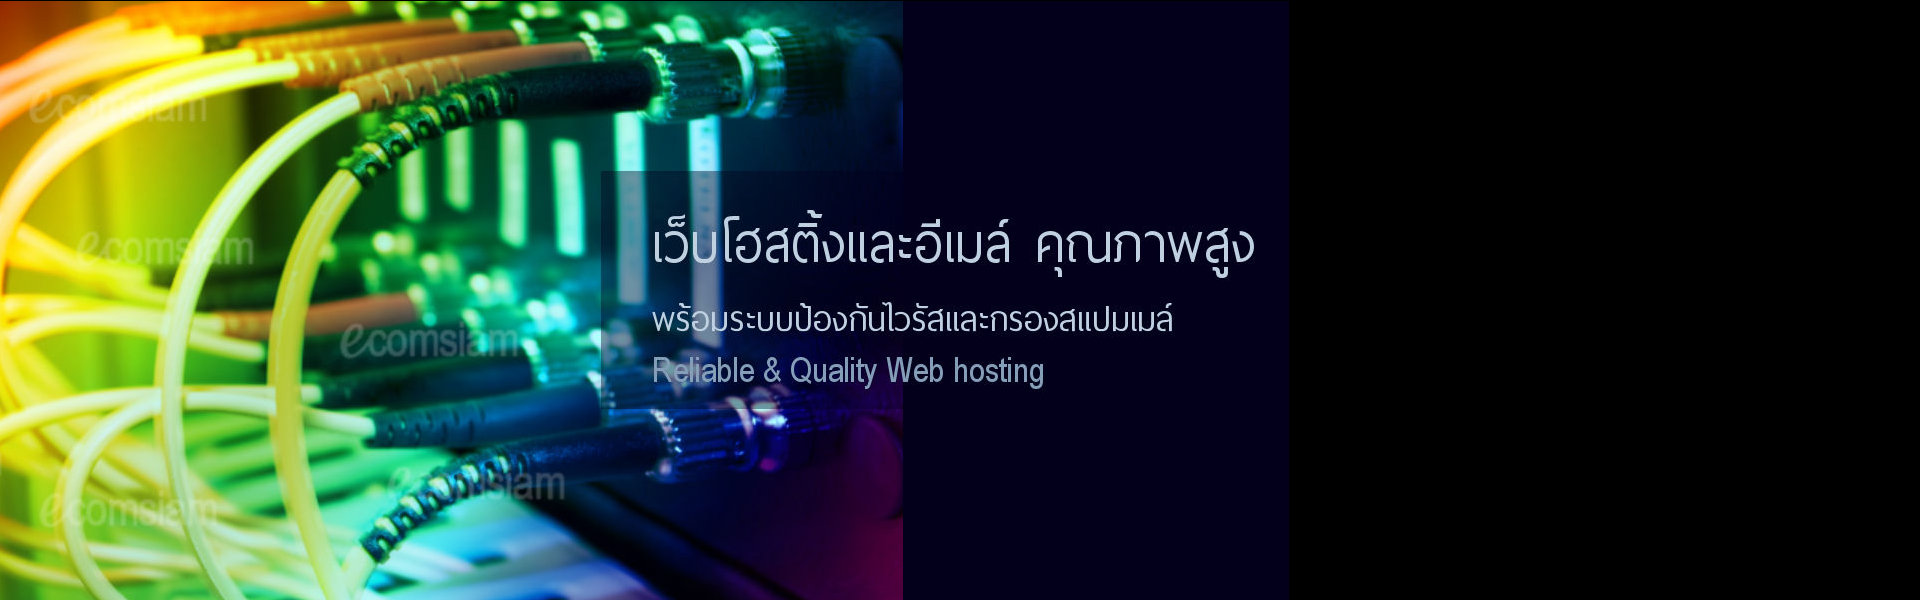 web hosting thailand datacenter